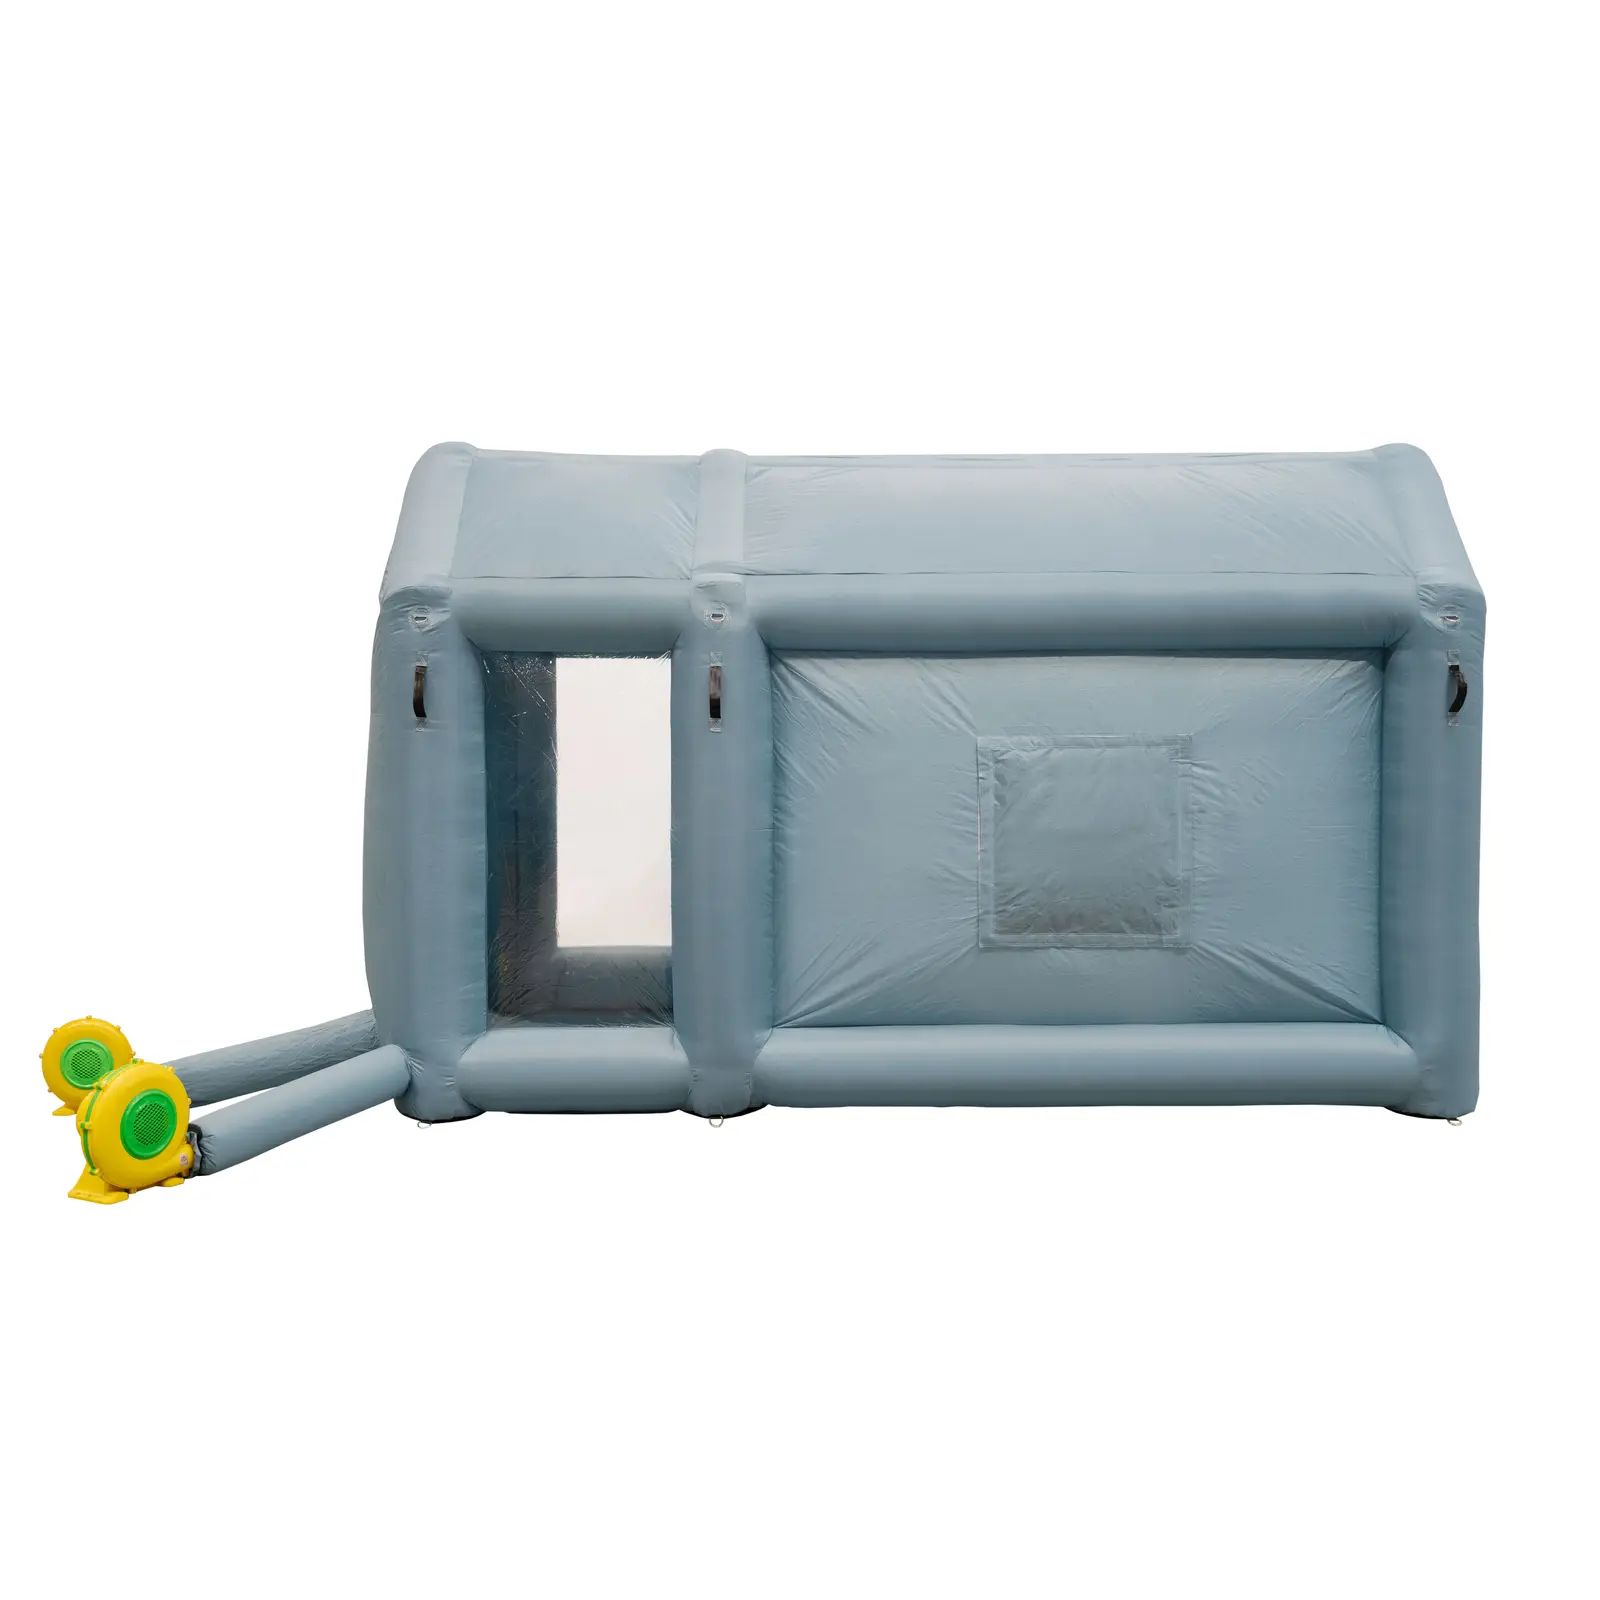 Uppblåsbar lackbox - 4 x 2,5 x 2,5 m - 750 W fläkt